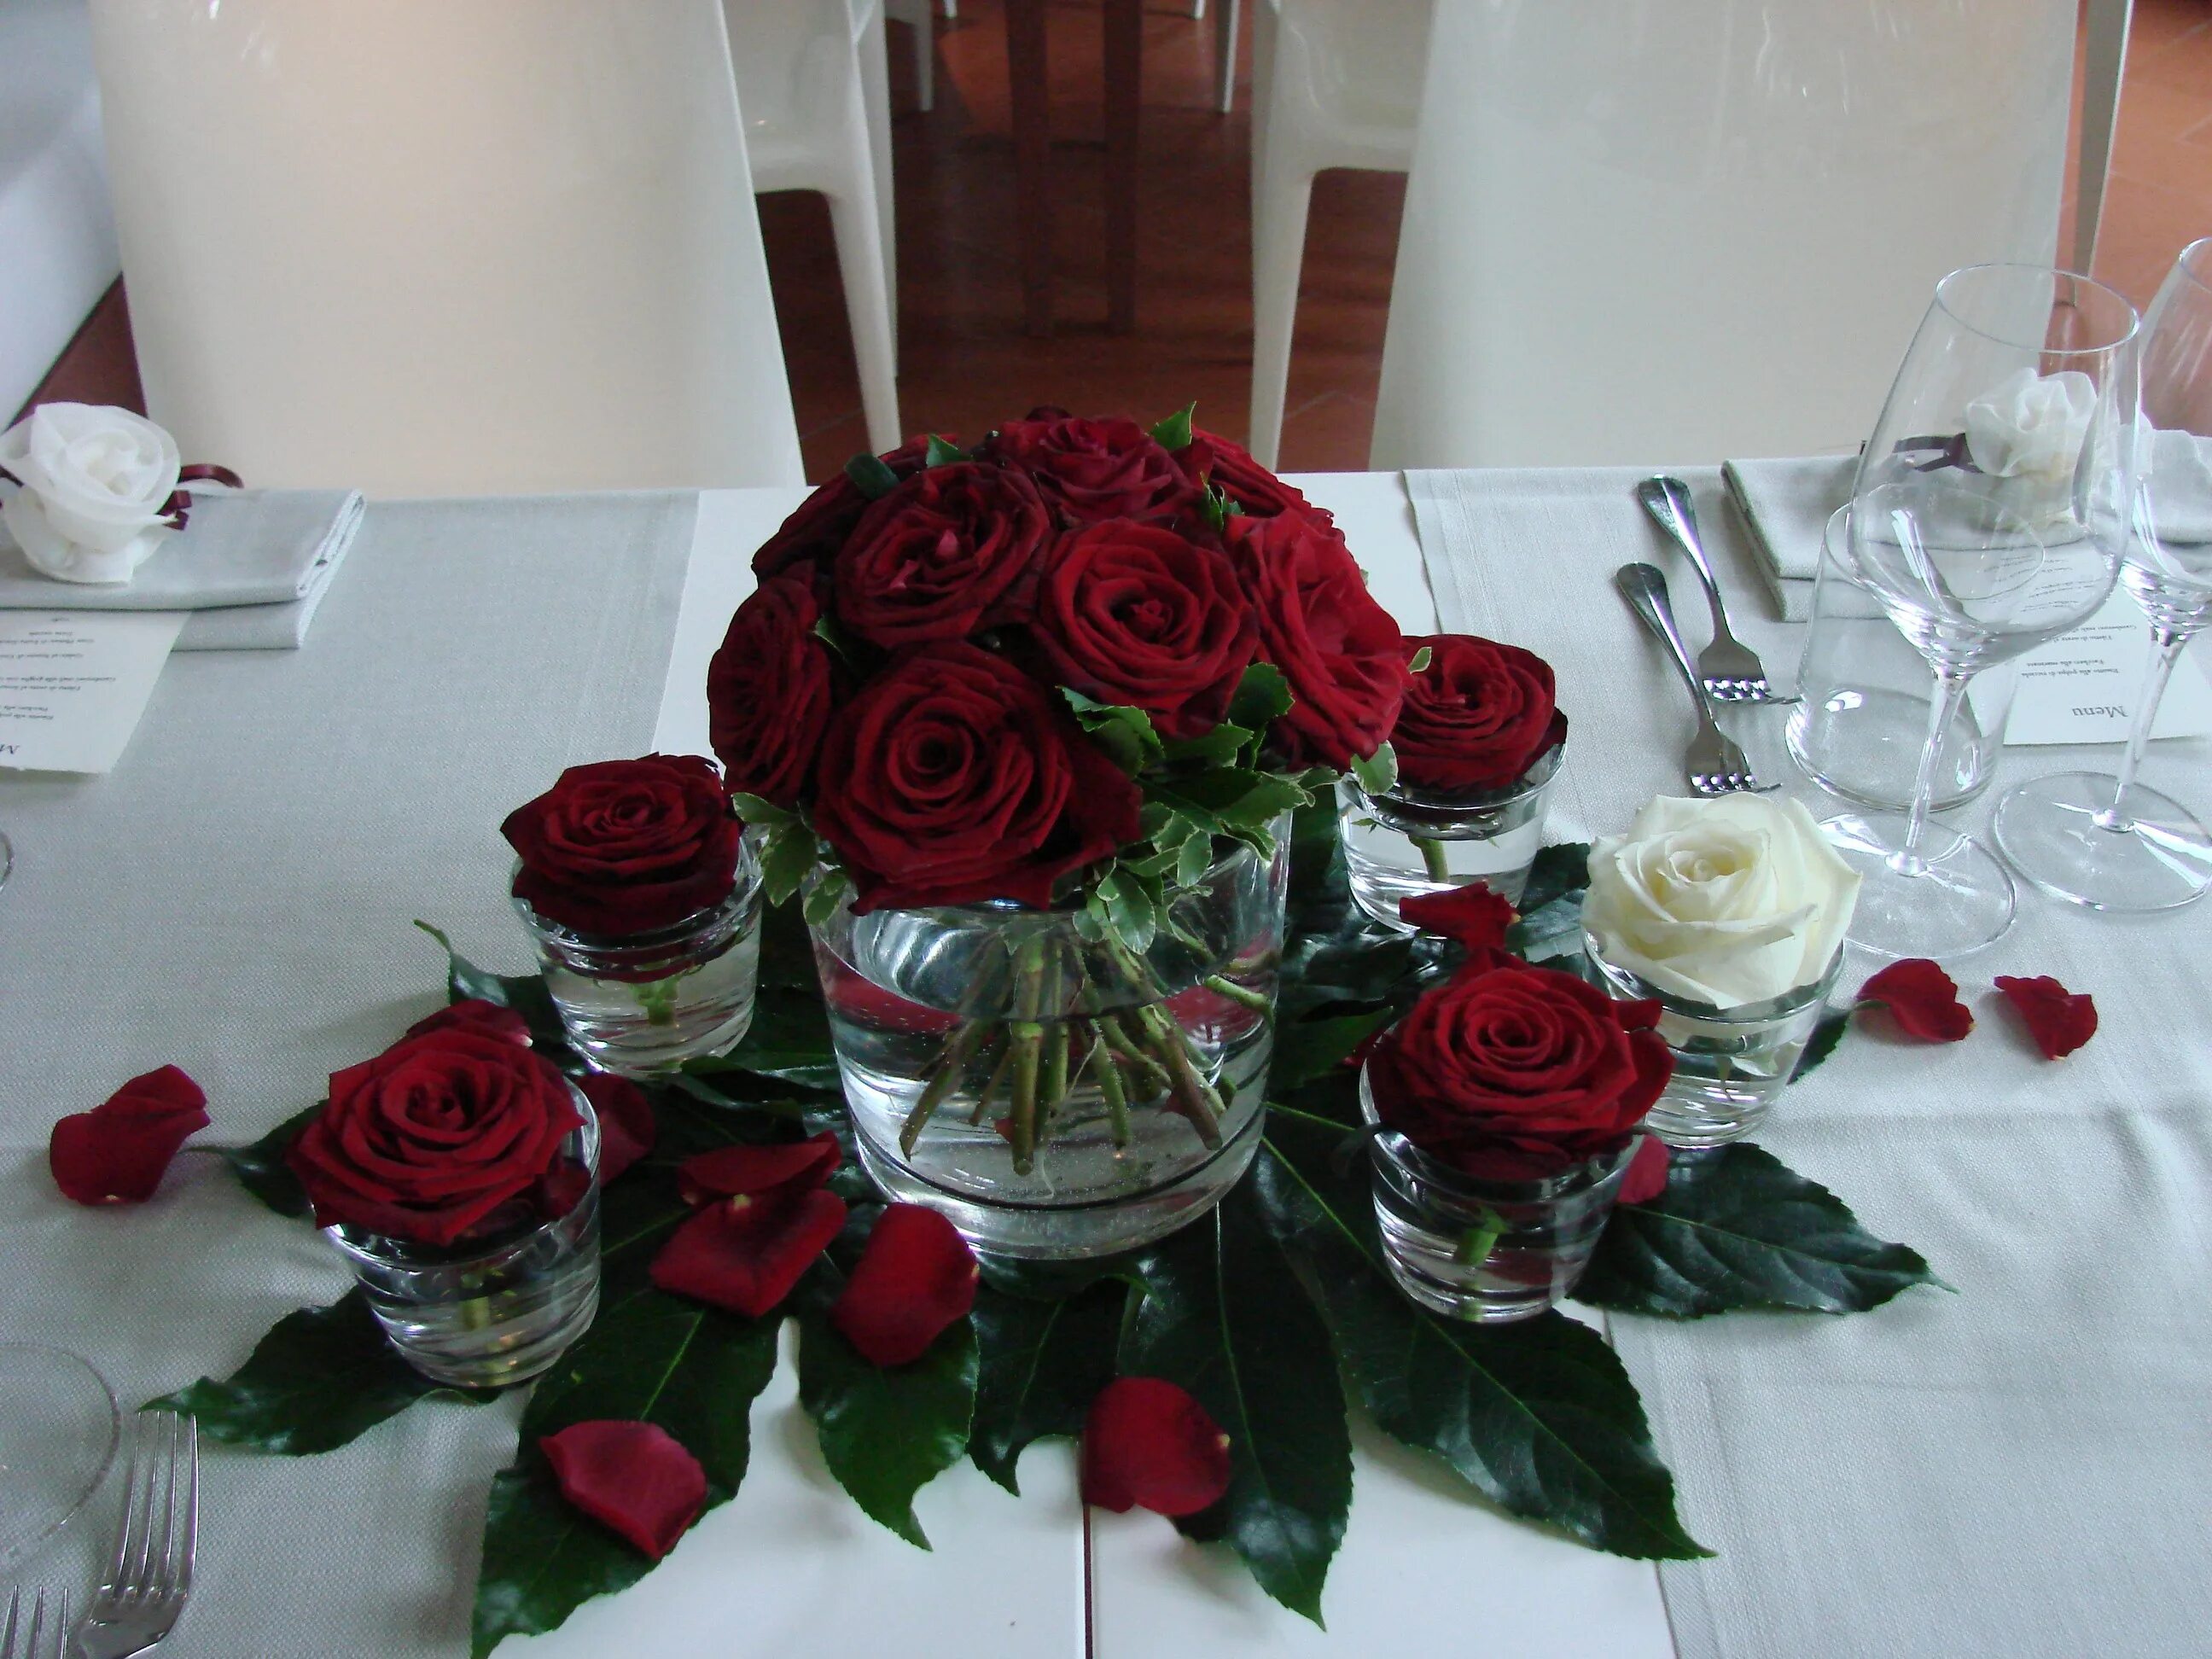 Композиция из цветов на стол. Букет на столе. Цветы на столе букет. Розы на столе. Букеты роз в вазе на столе